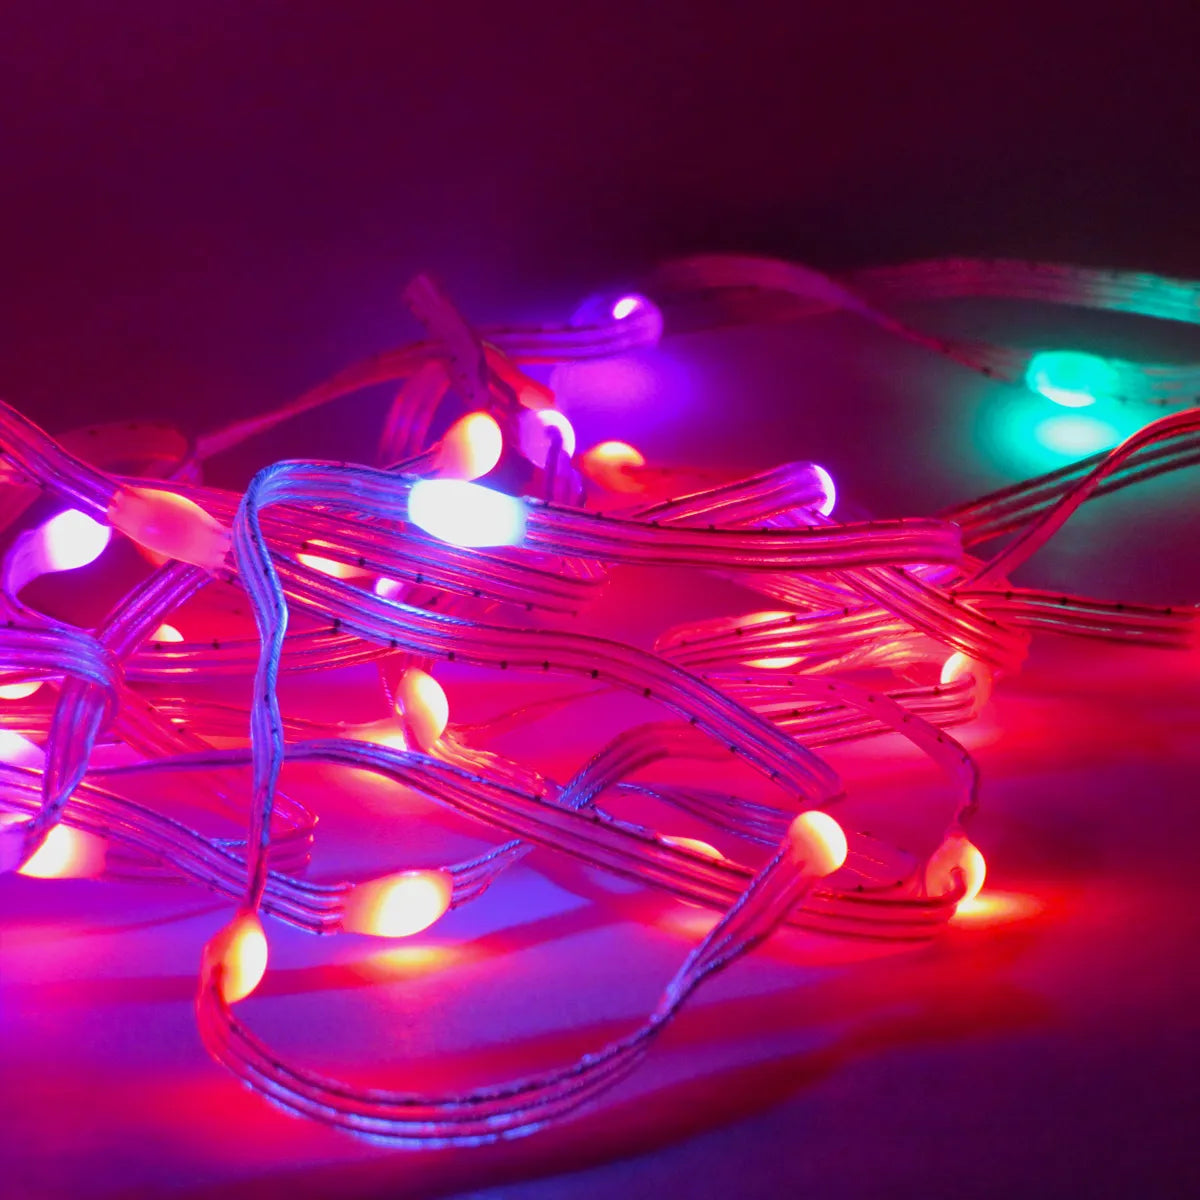 Slimme LED Kerstverlichting Lichtsnoer RGB 10 meter App bediening 5 watt